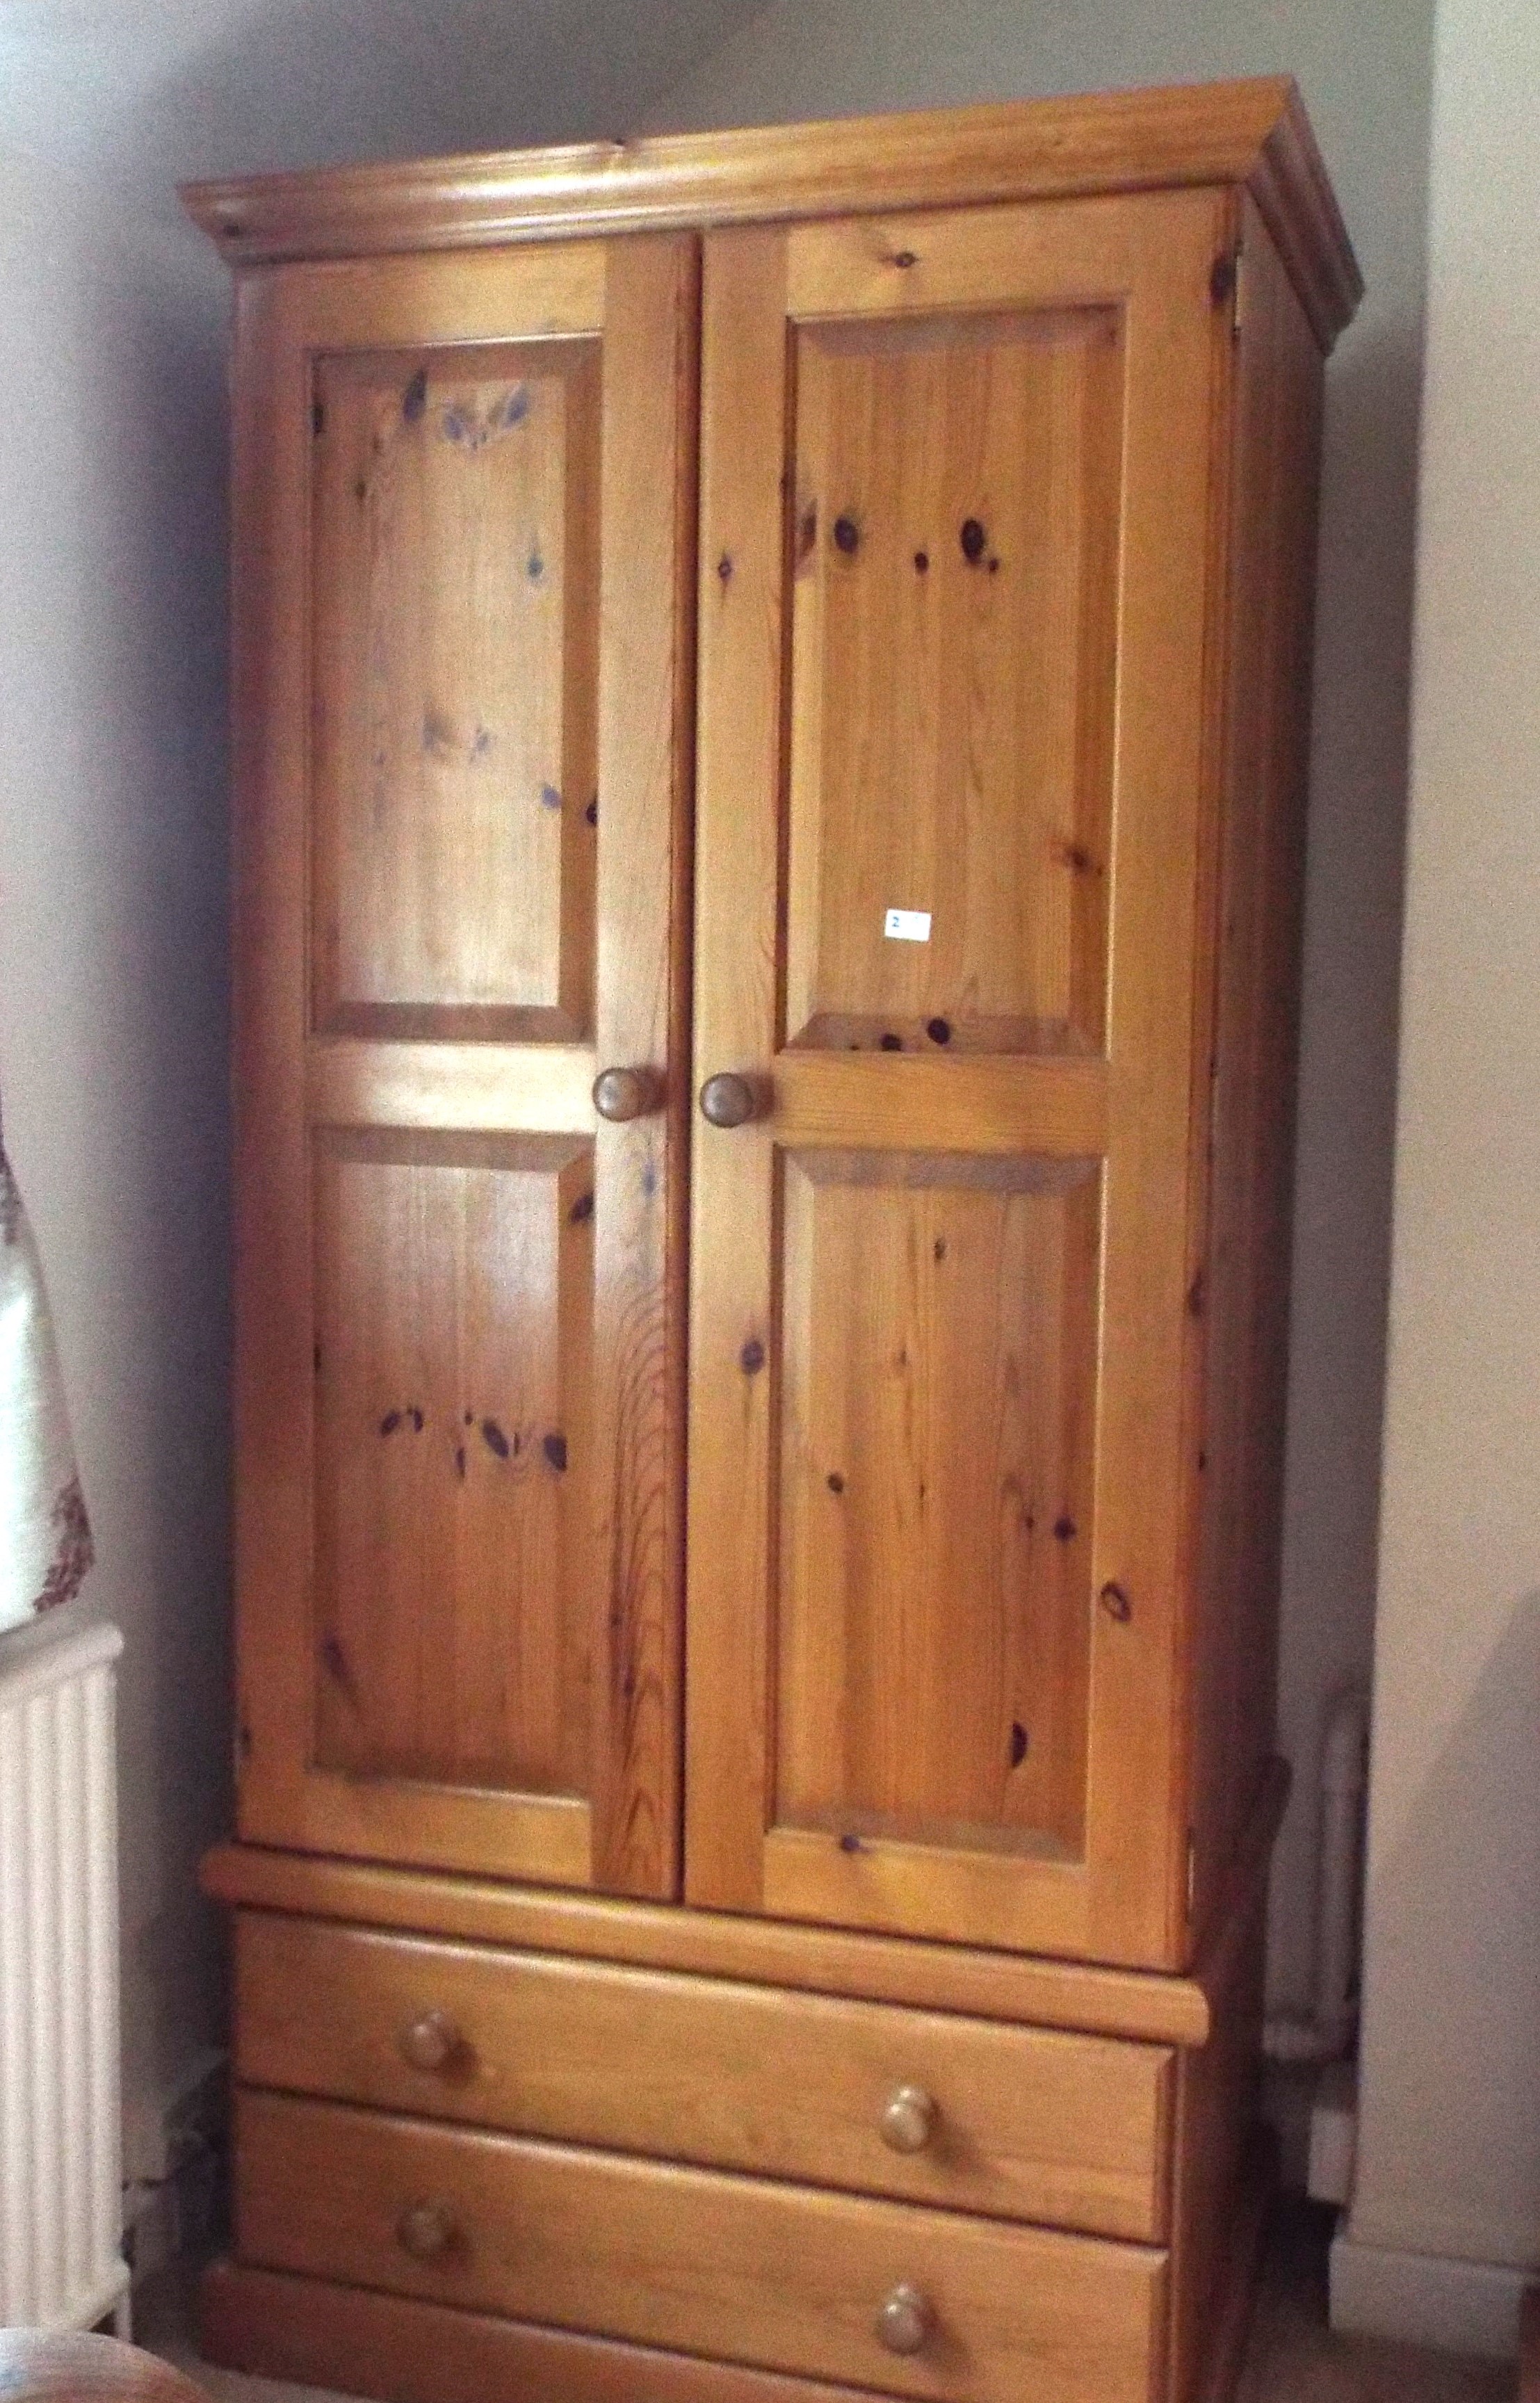 A pine wardrobe measuring 190 cm (h) x 9